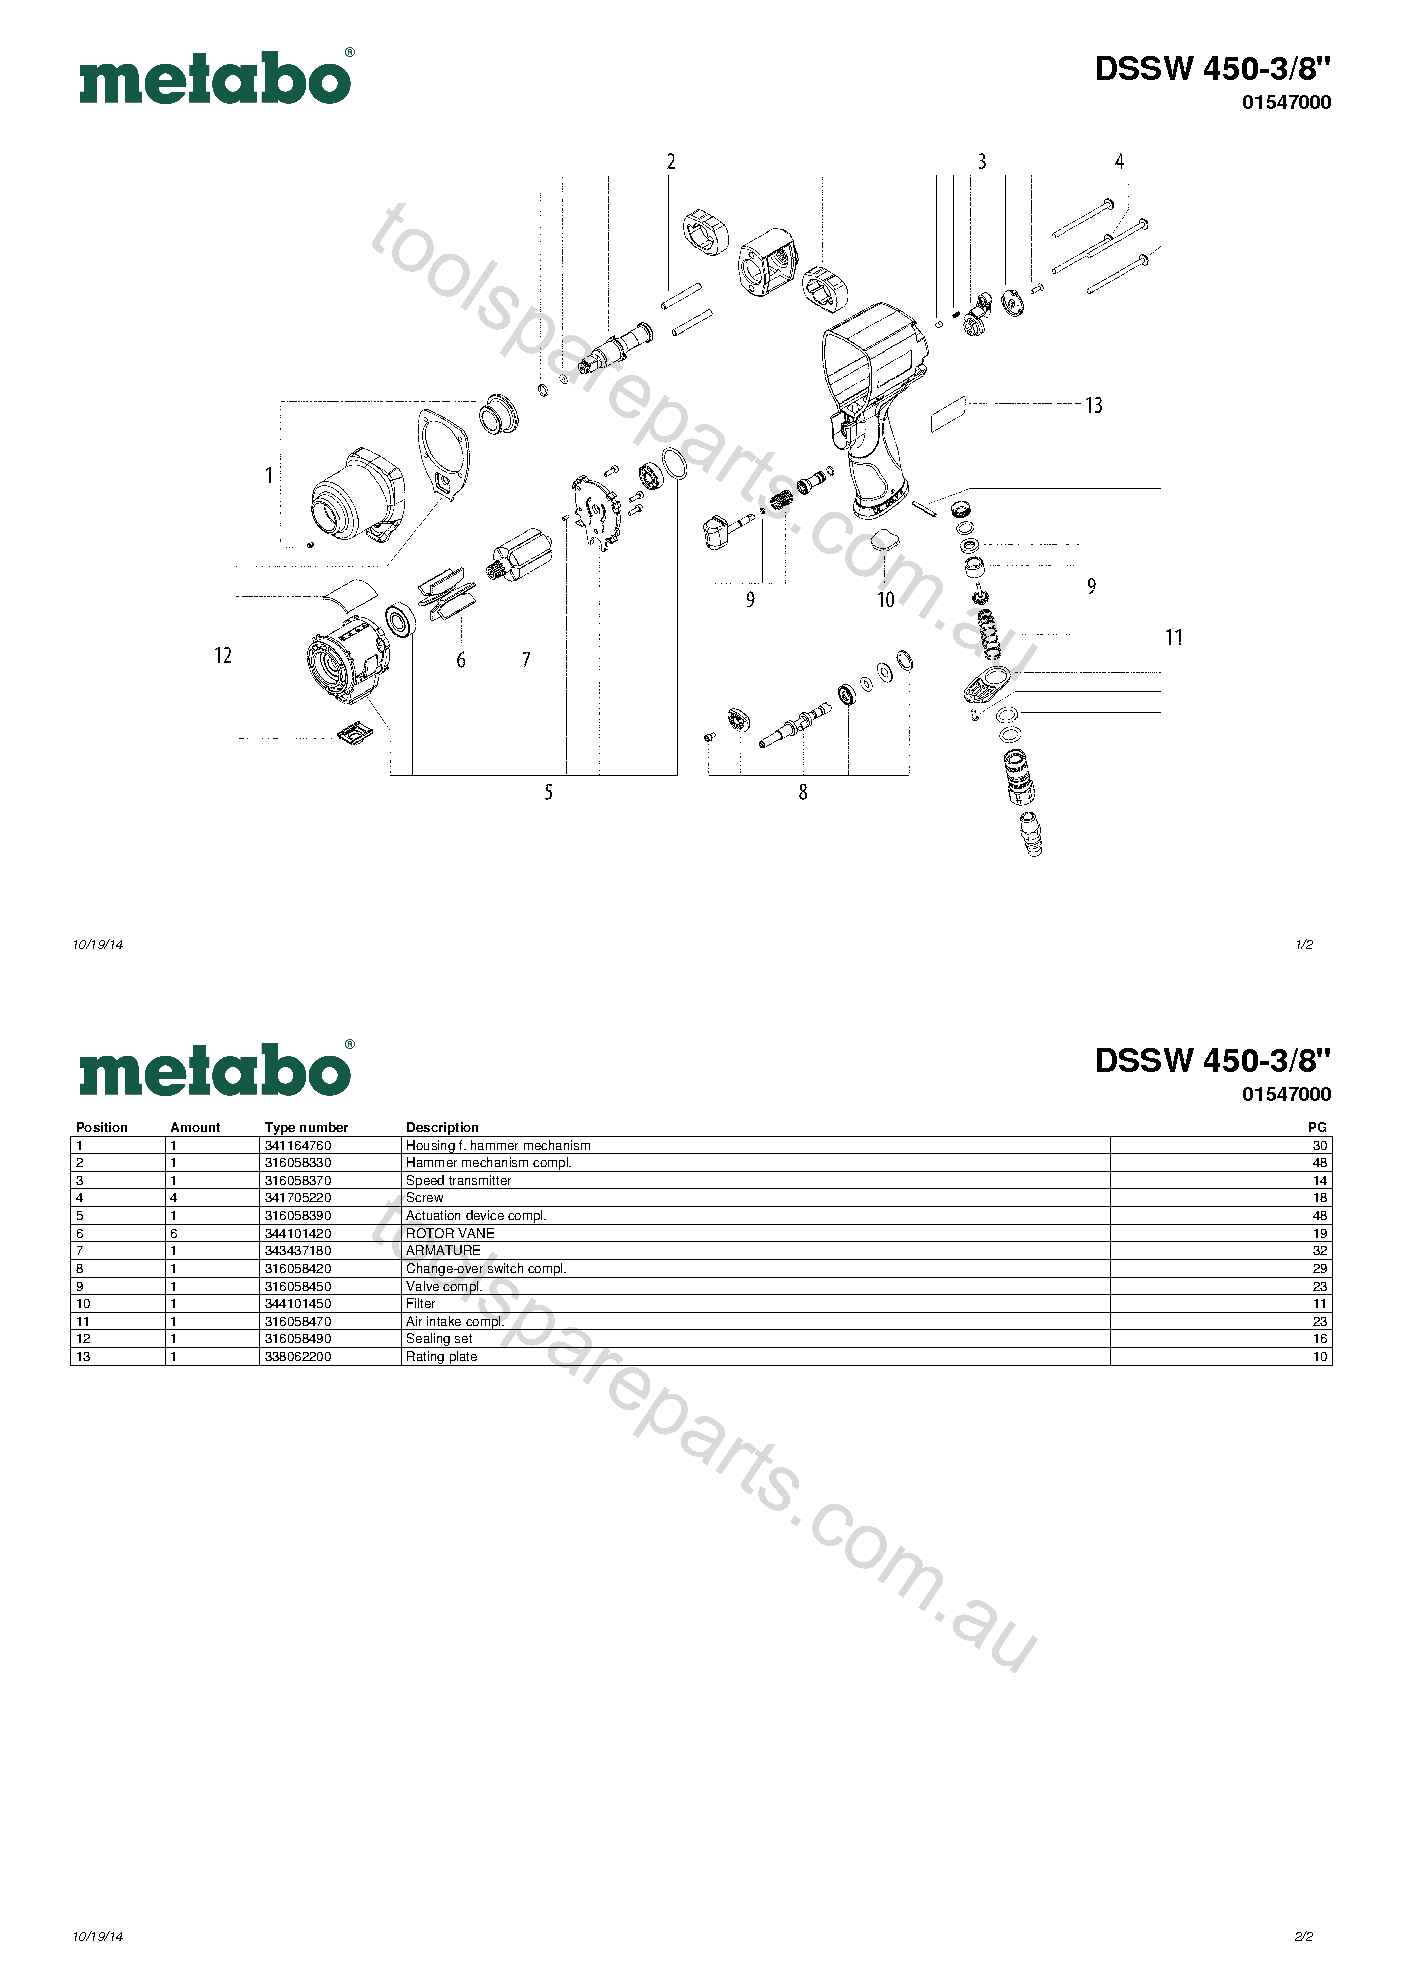 Metabo DSSW 450-3/8